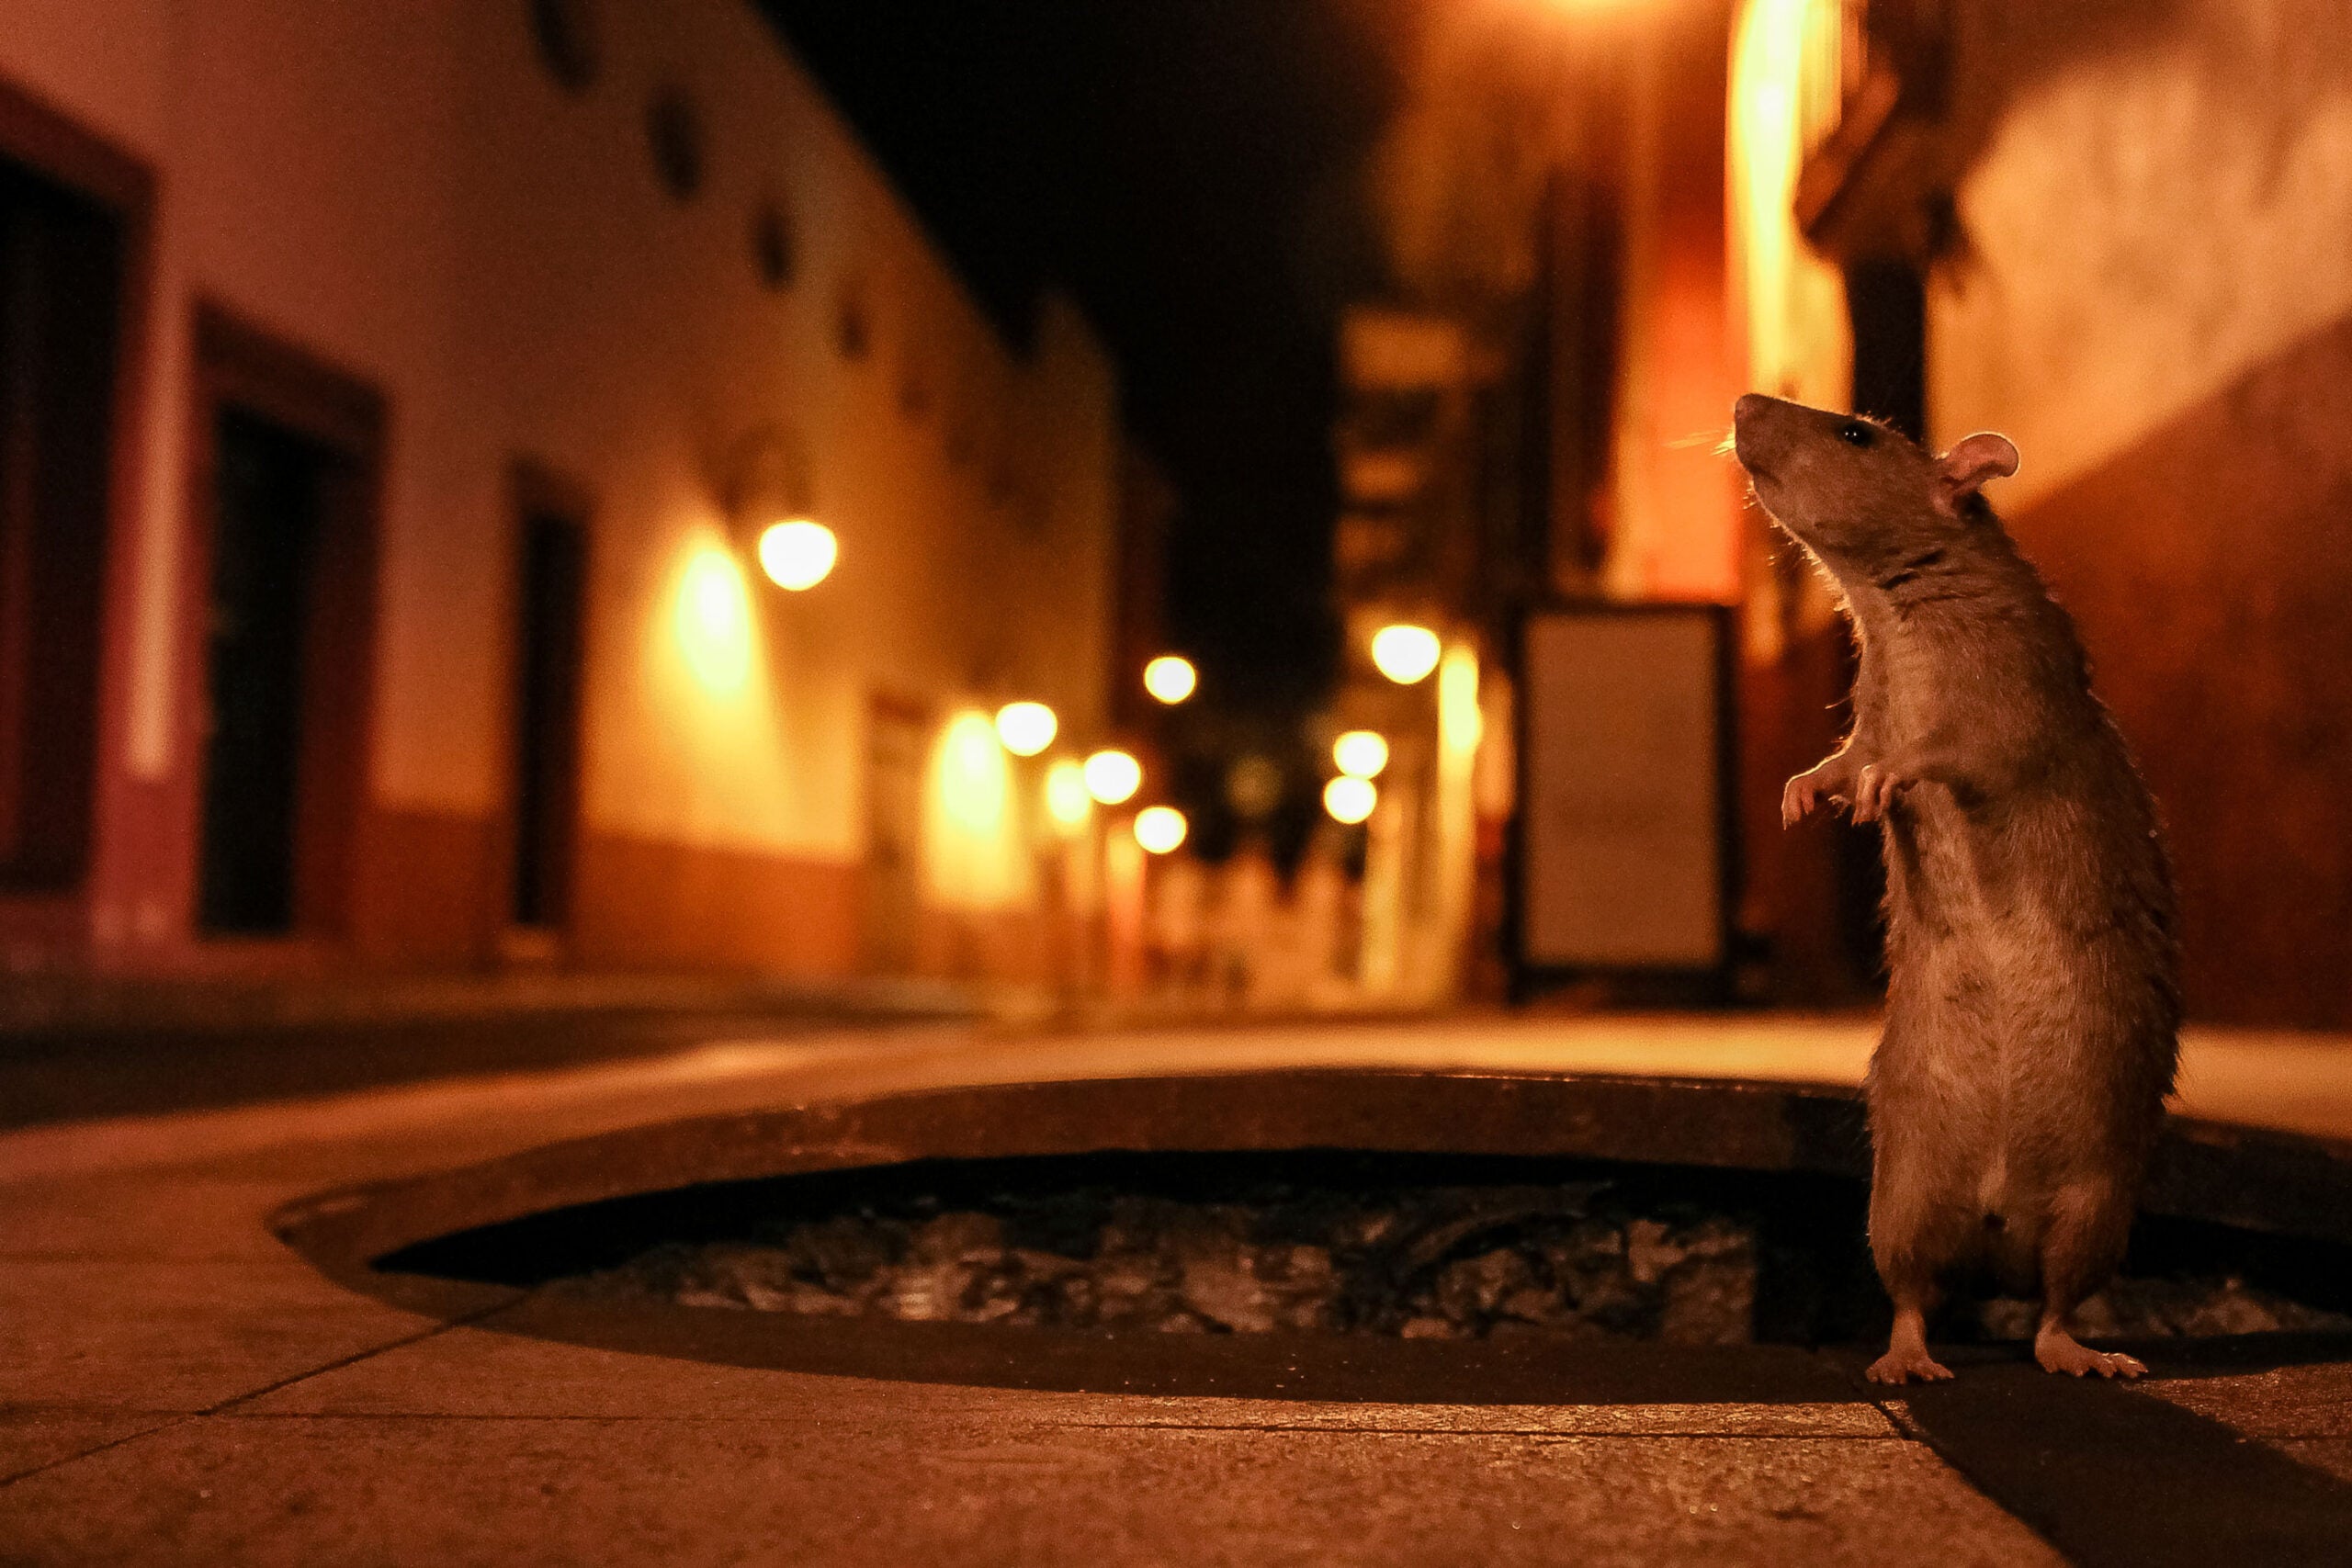 rat on empty street at night picfair urban wildlife photo contest